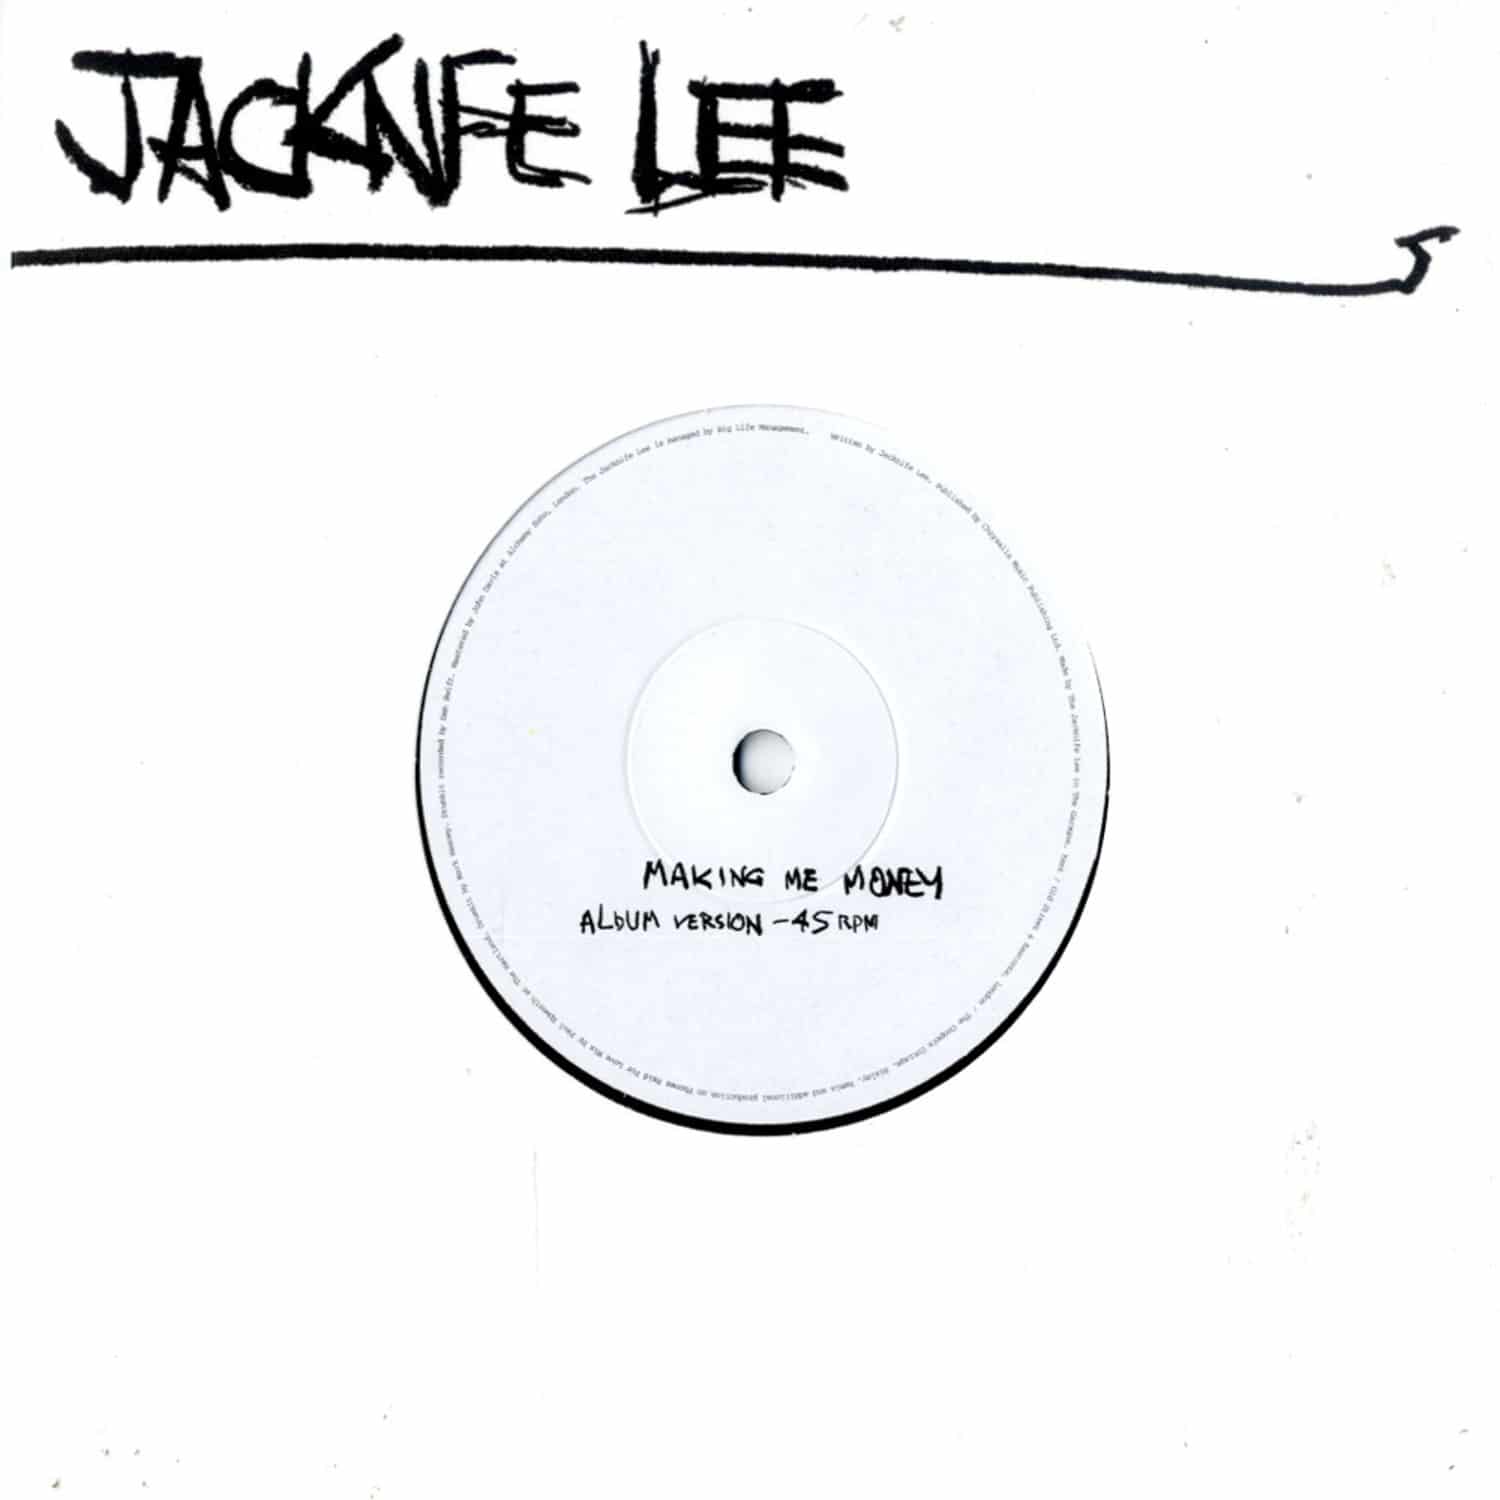 Jacknife Lee - MAKING ME MONEY 